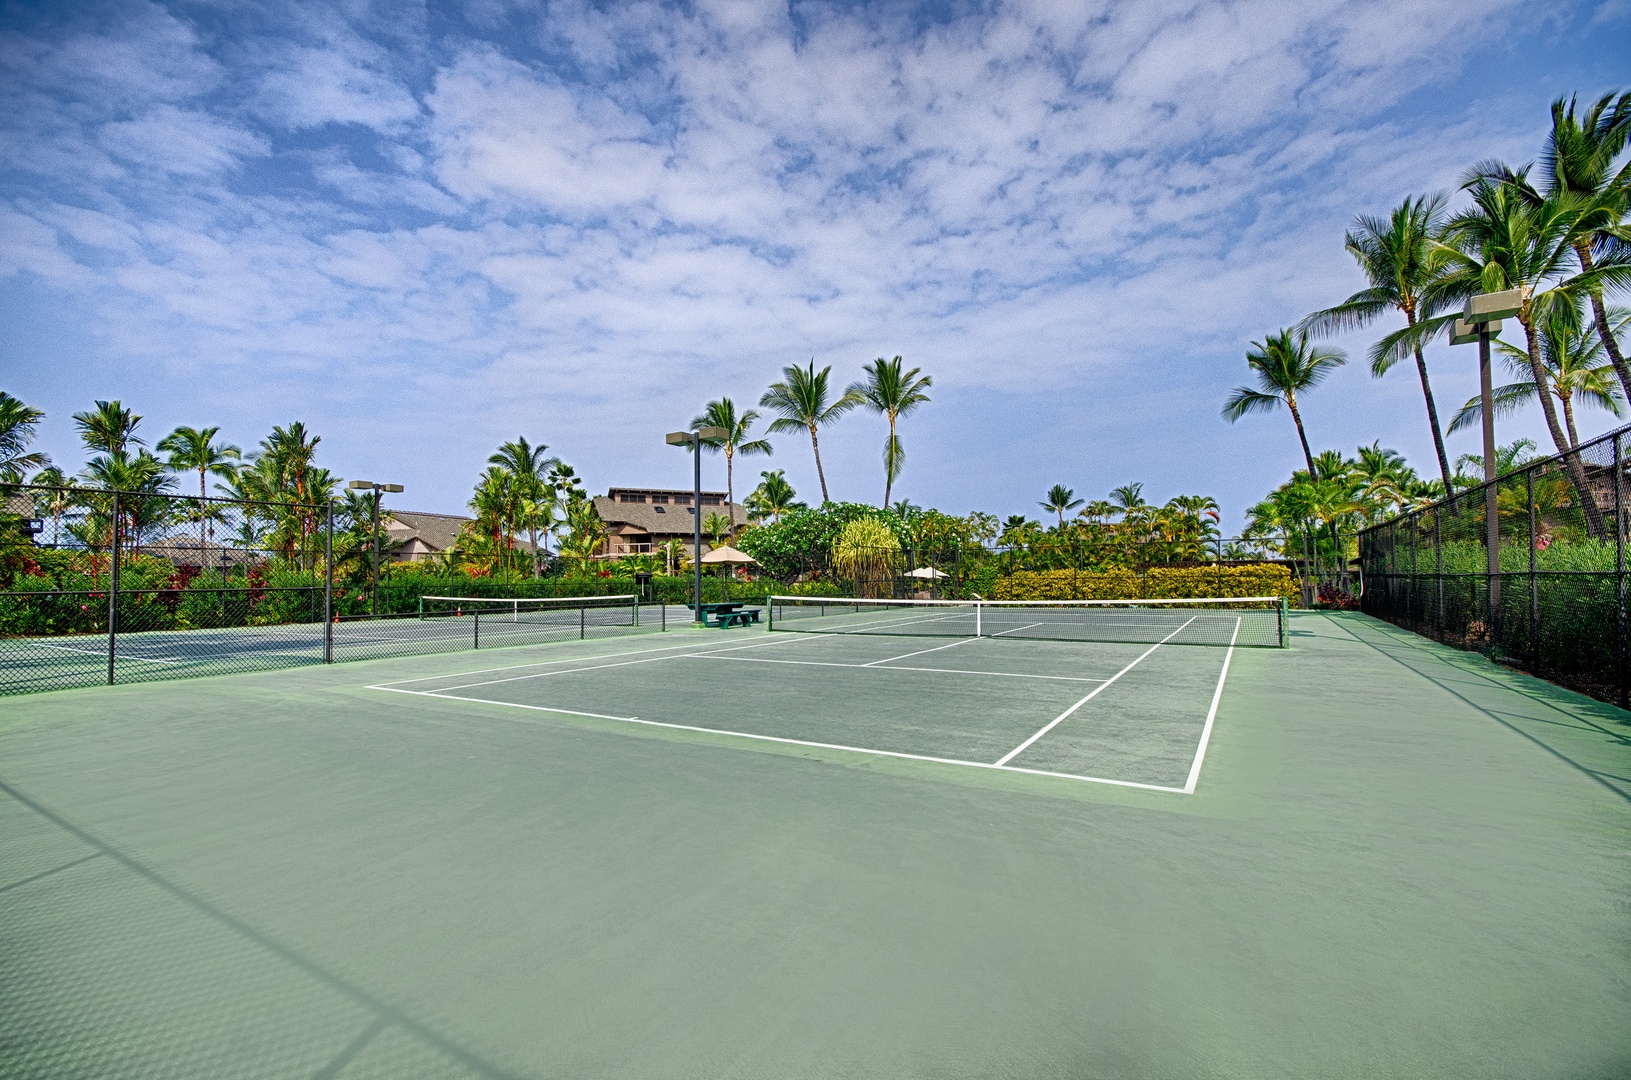 Kailua Kona Vacation Rentals, Kanaloa at Kona 701 - Complex tennis courts for your enjoyment